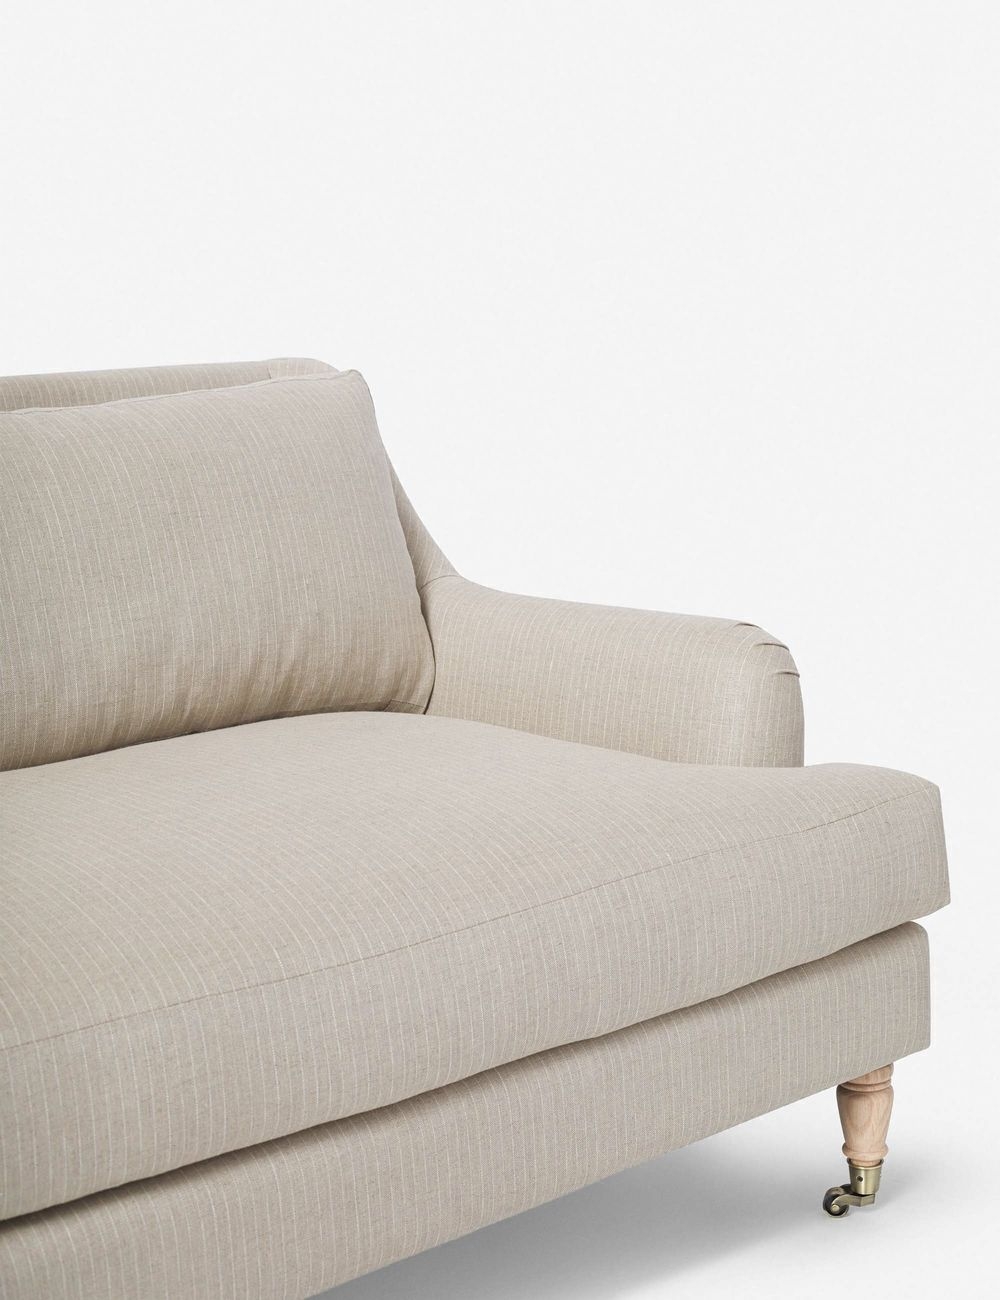 Rivington Sofa by Ginny Macdonald - Image 3